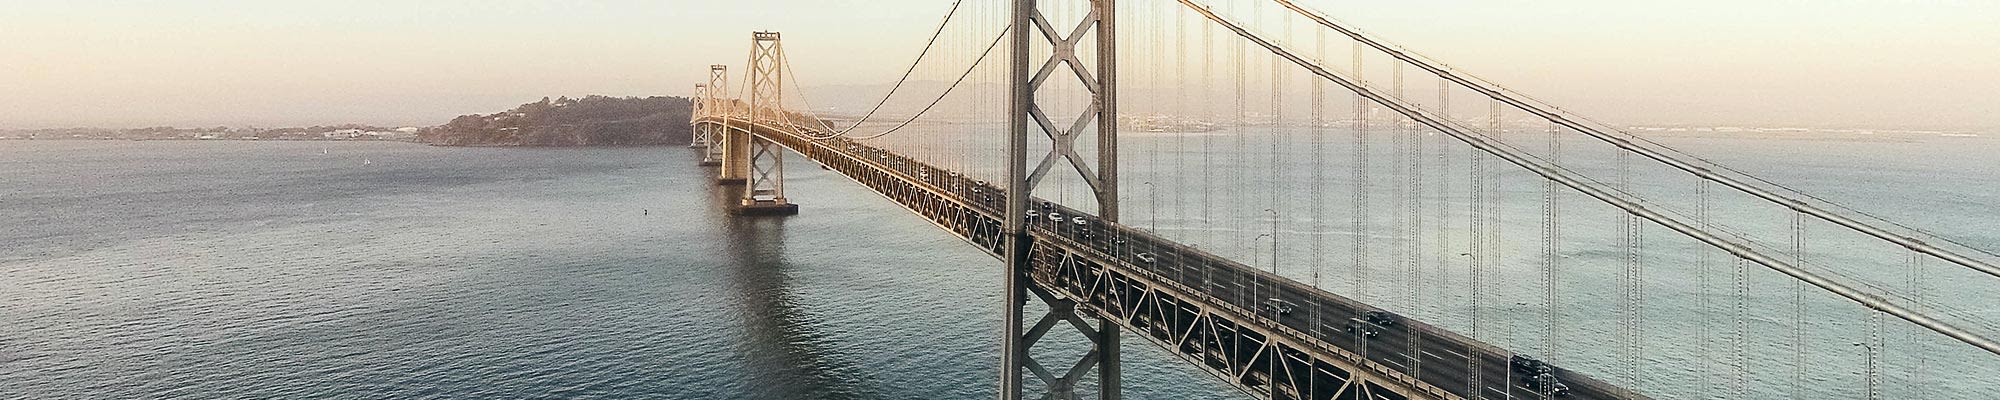 Brückenüberwachung Data Acquisition for Reliable, Stand-Alone Bridge Monitoring 